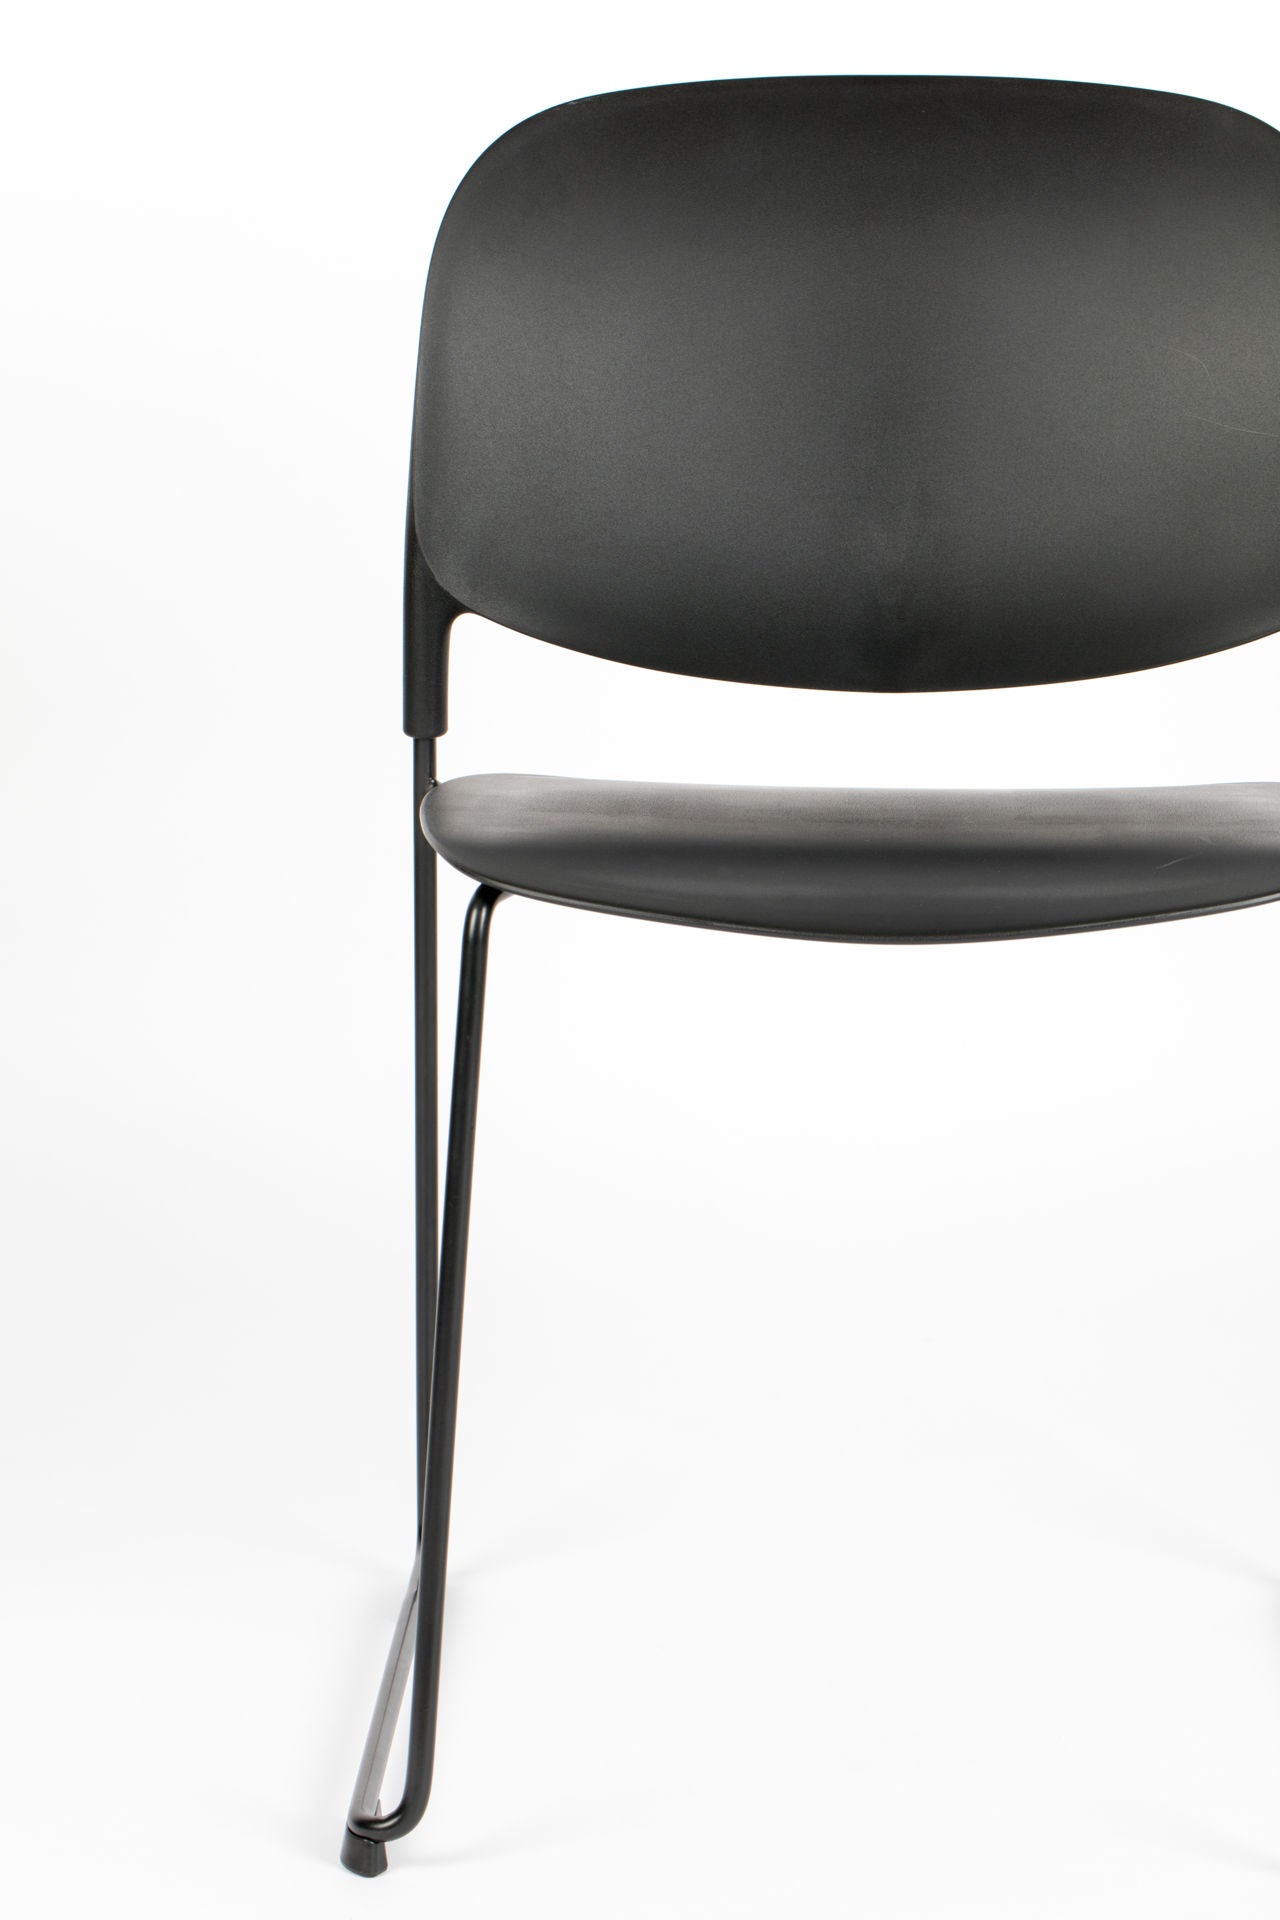 Nancy's Kennedale Chair - Retro - Black - Polypropylene, Steel, Plastic - 52.5 cm x 48.5 cm x 80 cm